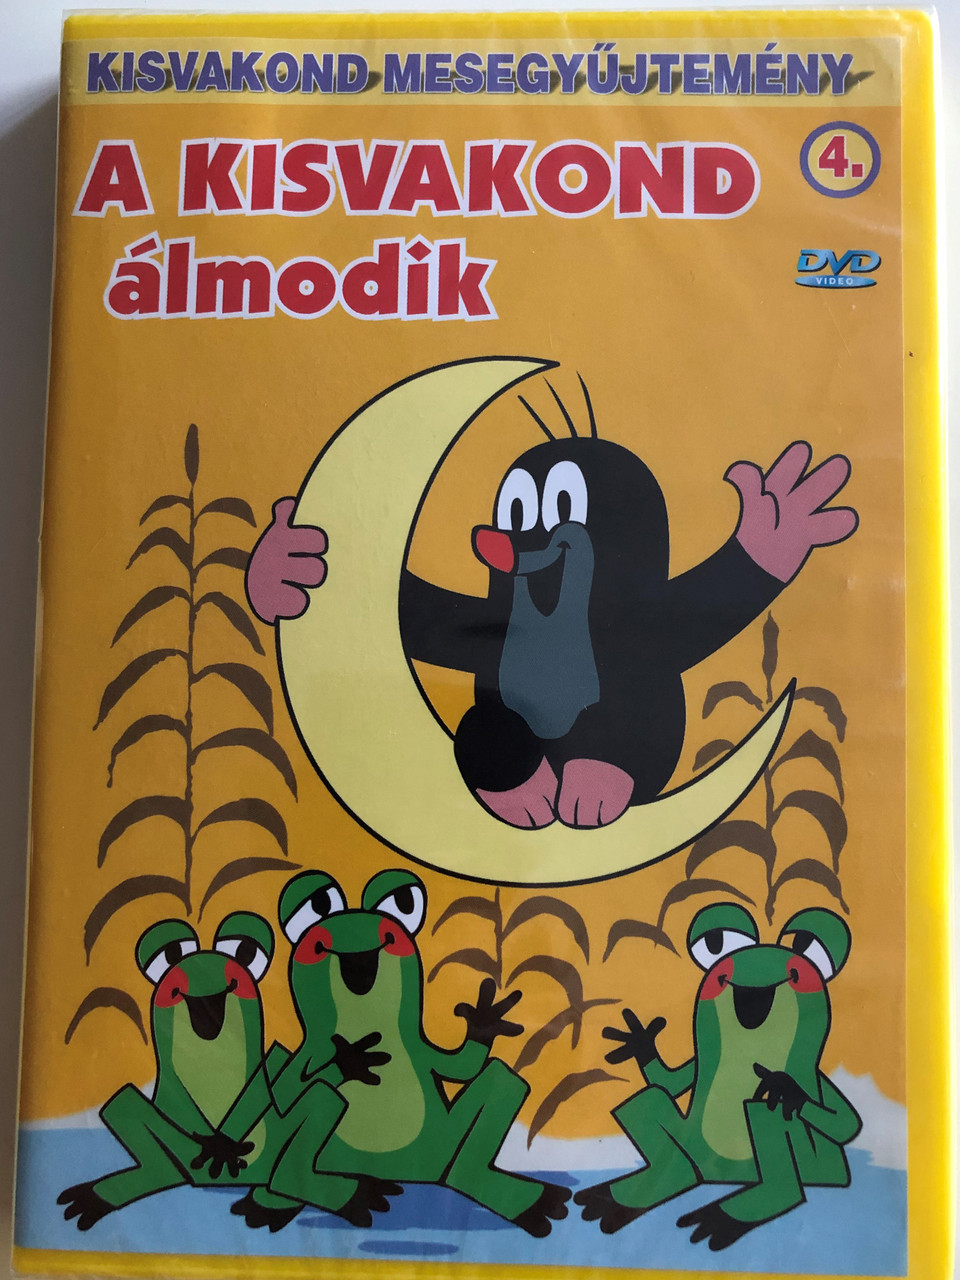 Krtek (Little Mole) is dreaming Series 4. DVD 2000 Kisvakond álmodik -  Kisvakond mesegyűjtemény 4. / 5 episodes on disc / Classic Czech Cartoon /  Created by Zdeněk Miler - bibleinmylanguage